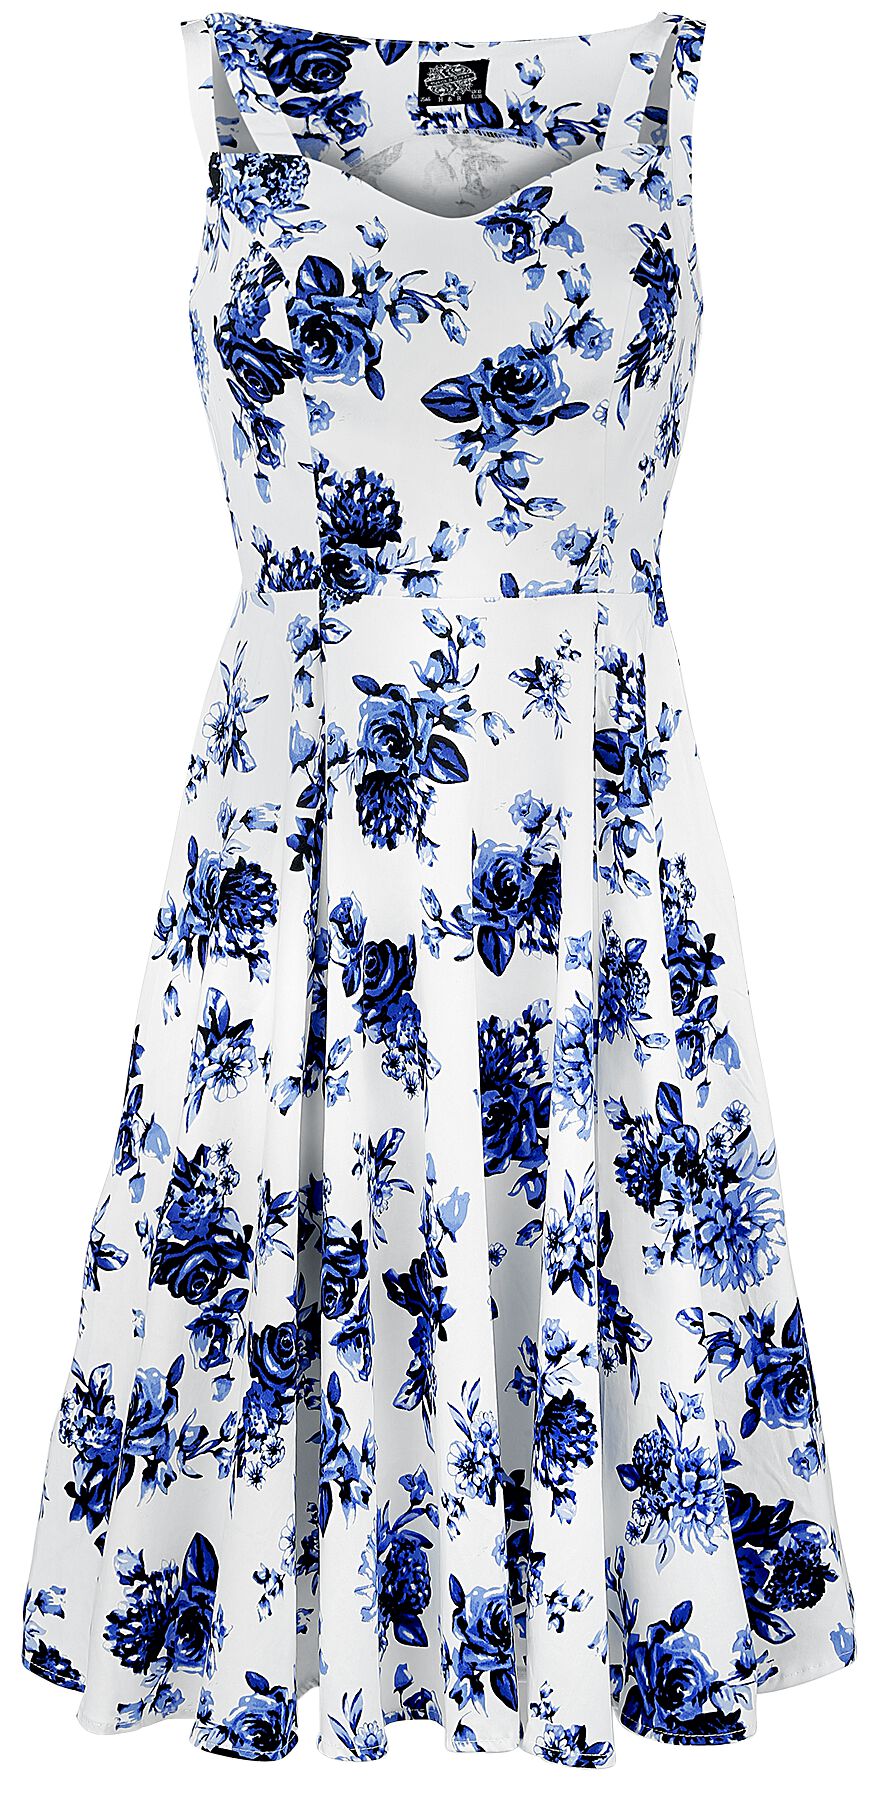 H&R London - Rockabilly Kleid knielang - Blue Rosaceae Swing Dress - S bis 3XL - für Damen - Größe M - multicolor